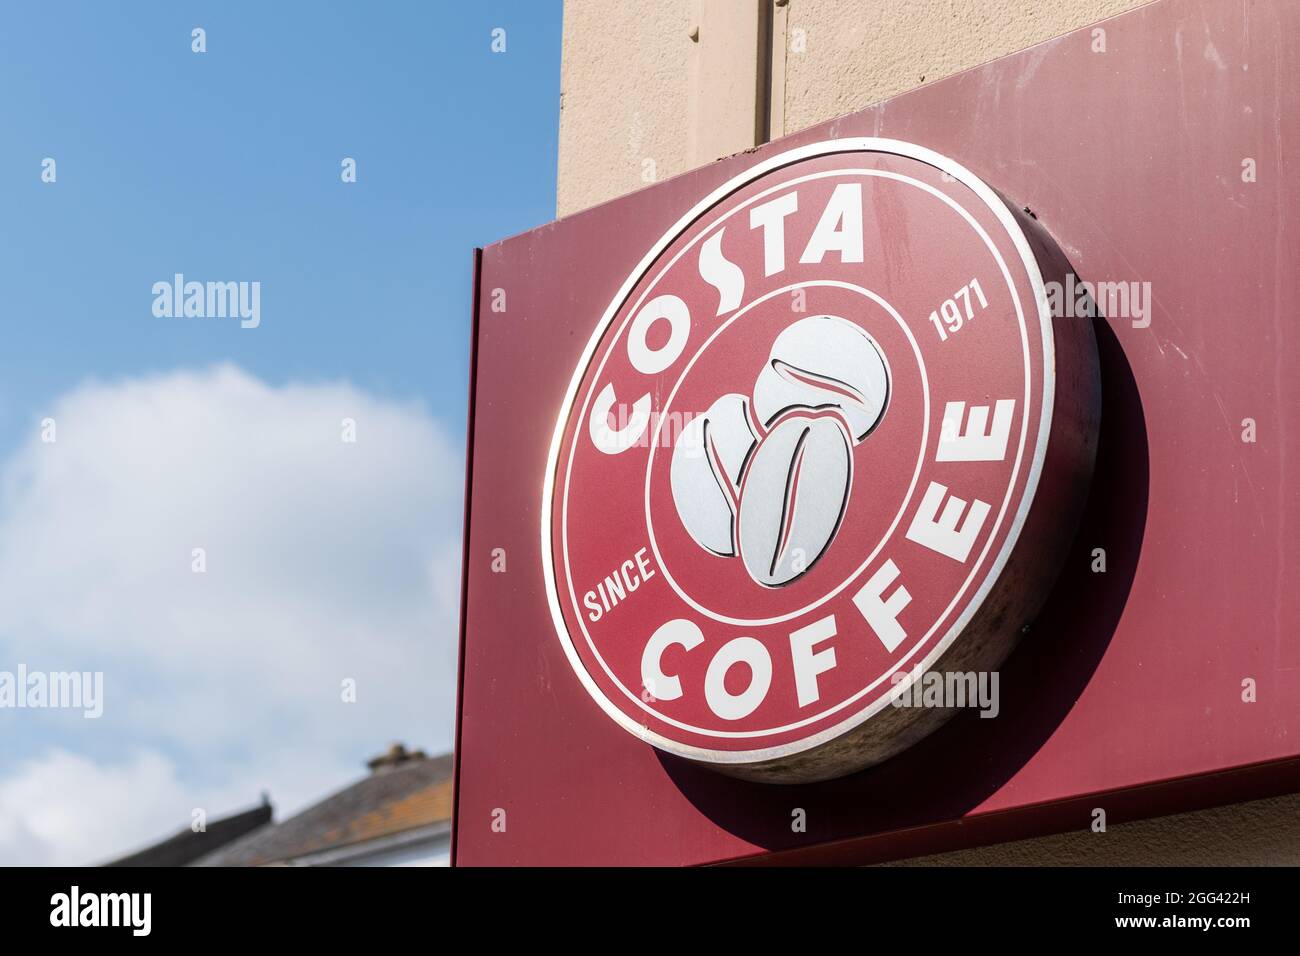 Costa Coffee Logo Stock Photo